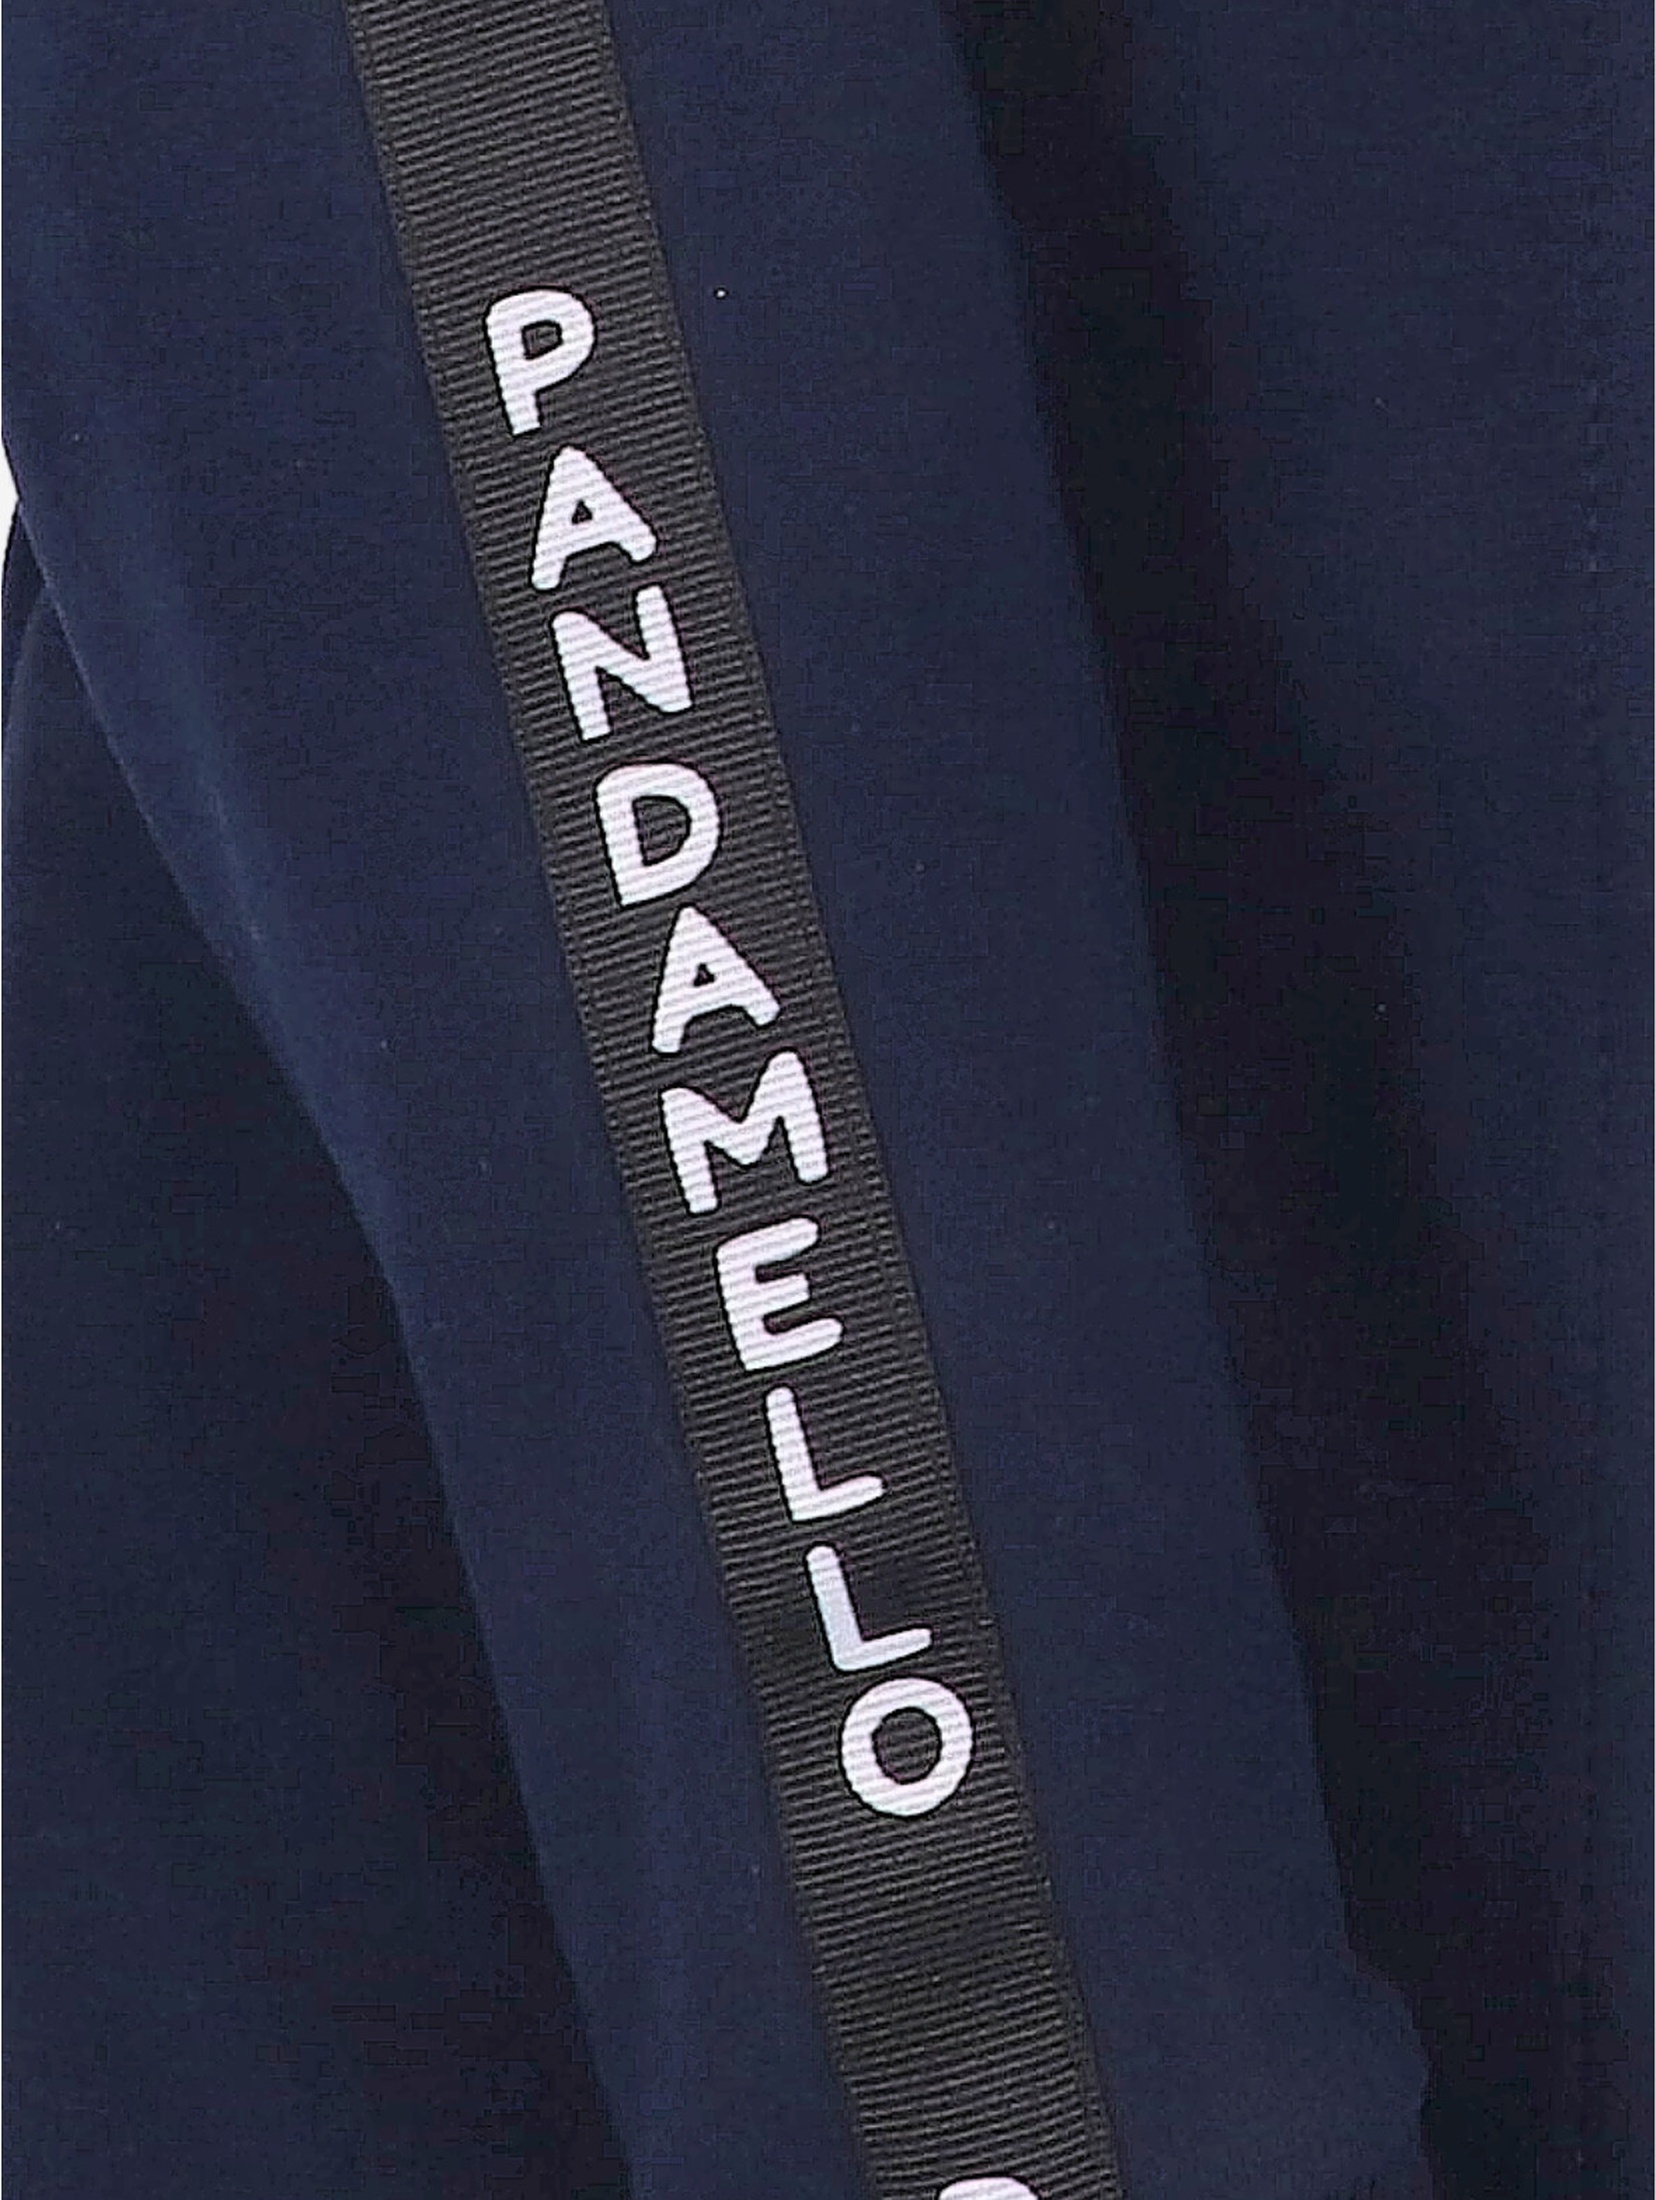 Bluza z kapturem Pandamello granatowa